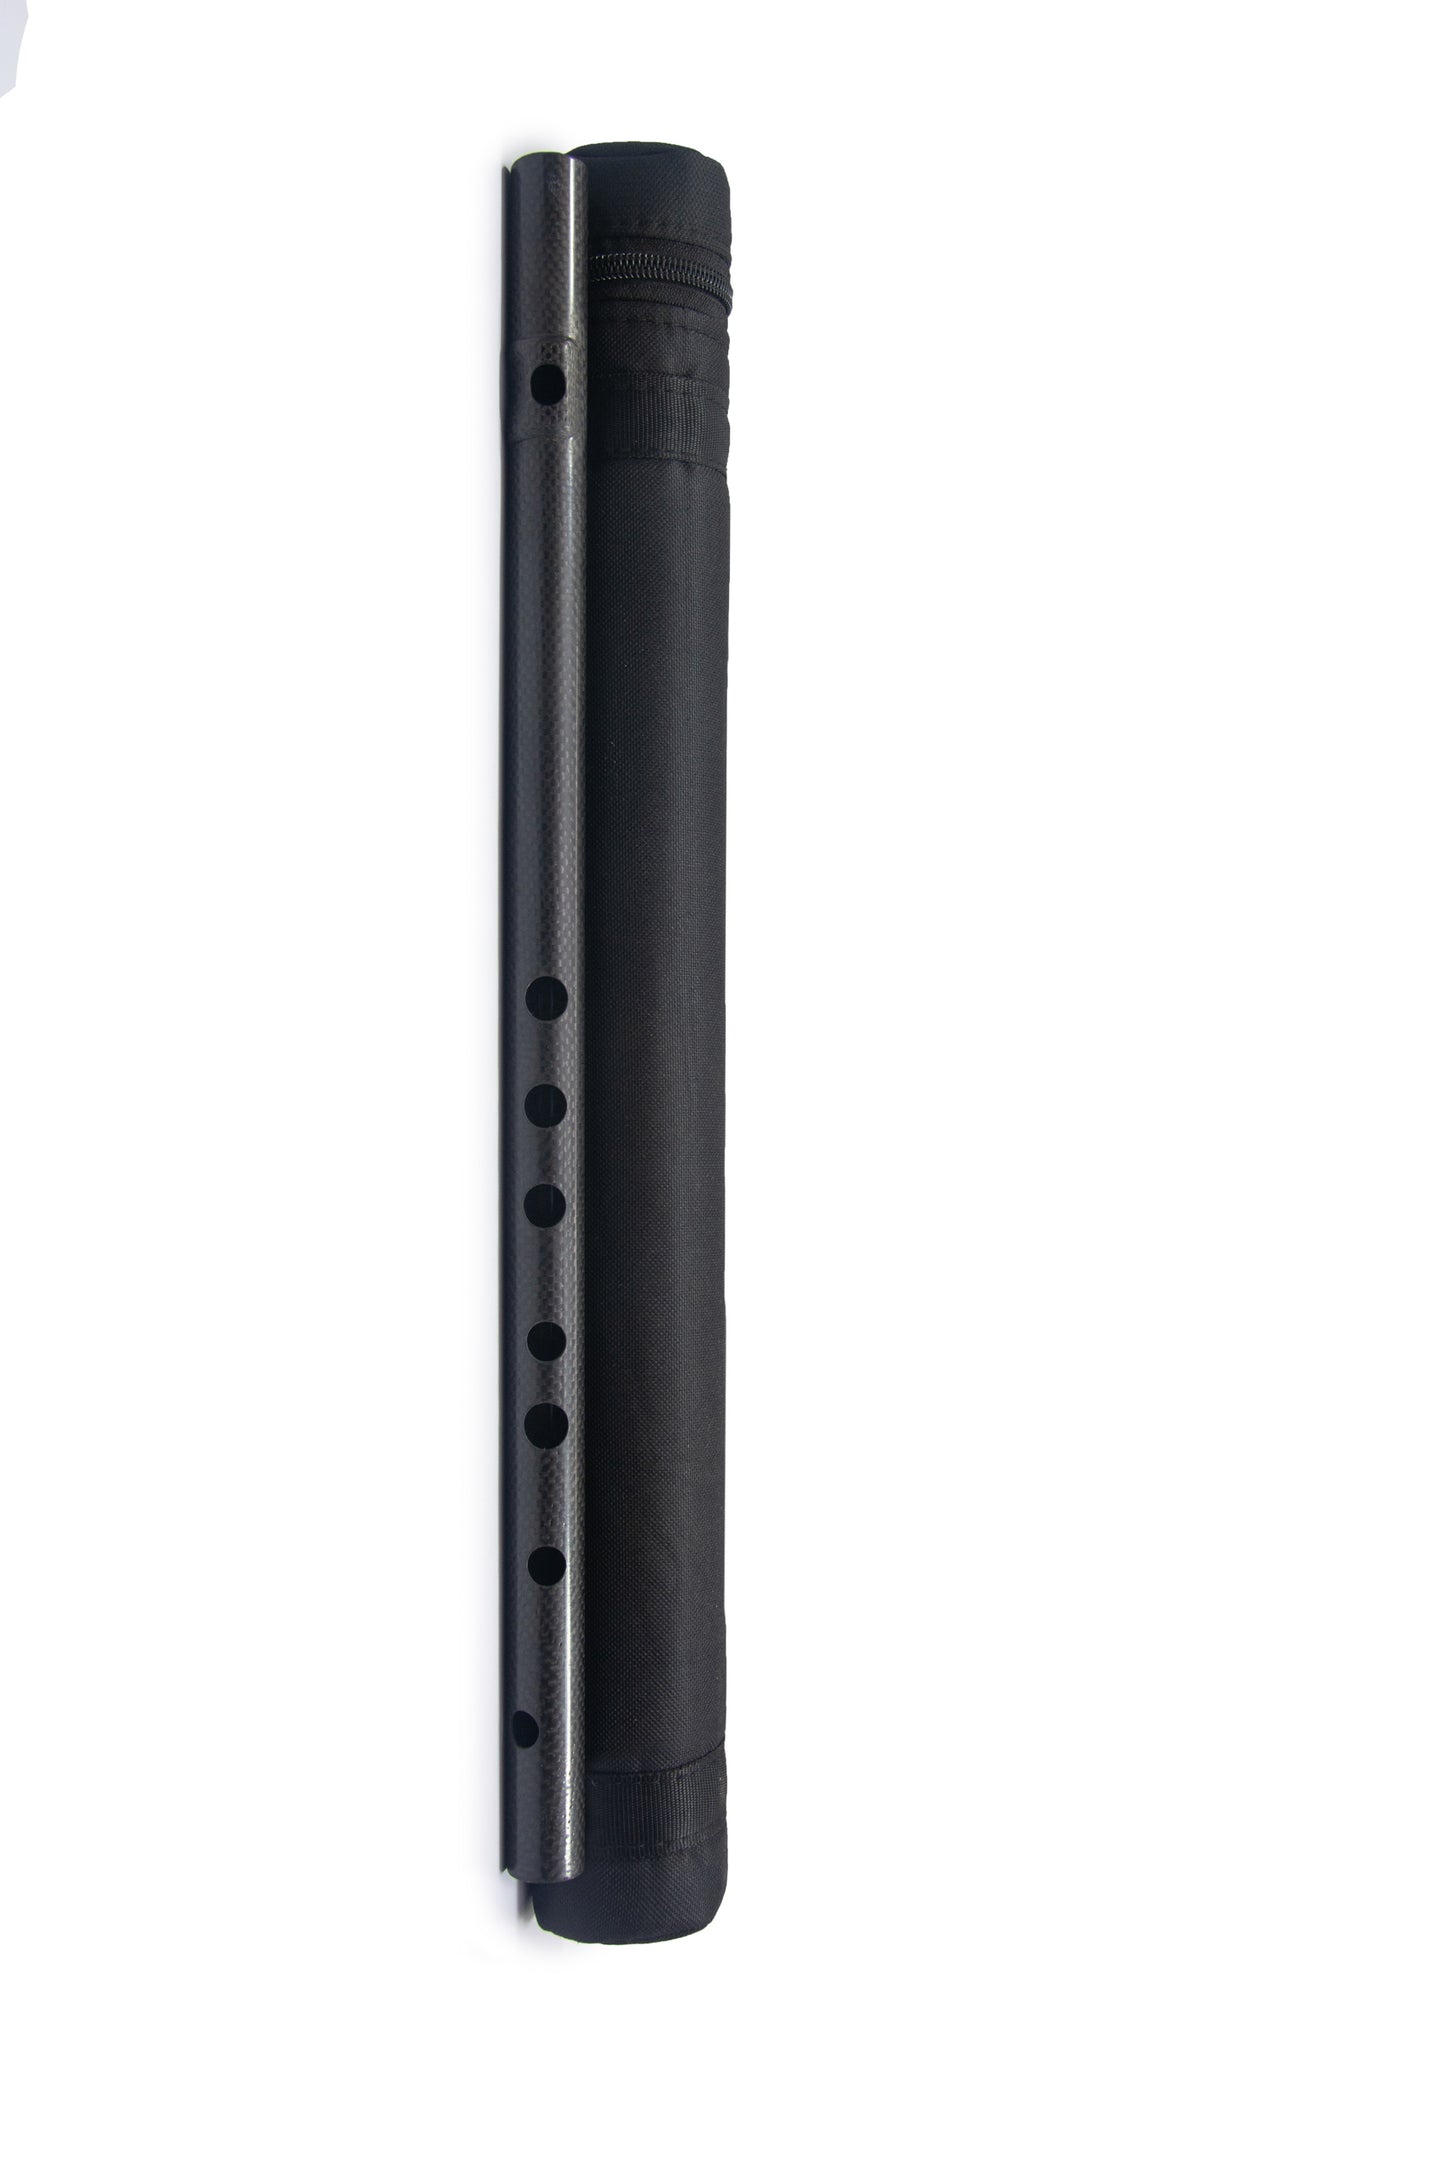 राधे फ्लूट्स कार्बन फाइबर सी प्राकृतिक बांसुरी मध्य ऑक्टेव हार्ड कवर के साथ 19"इंच